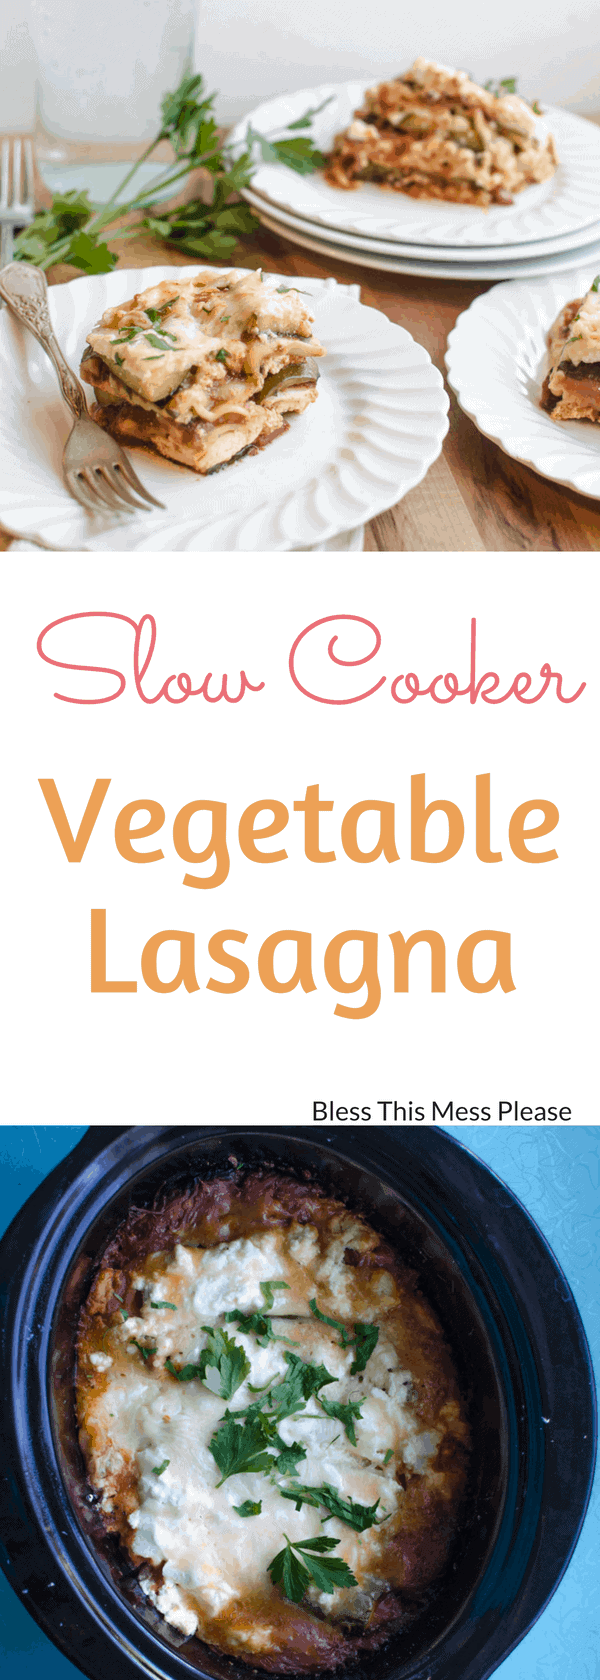 Slow Cooker Vegetable Lasagna